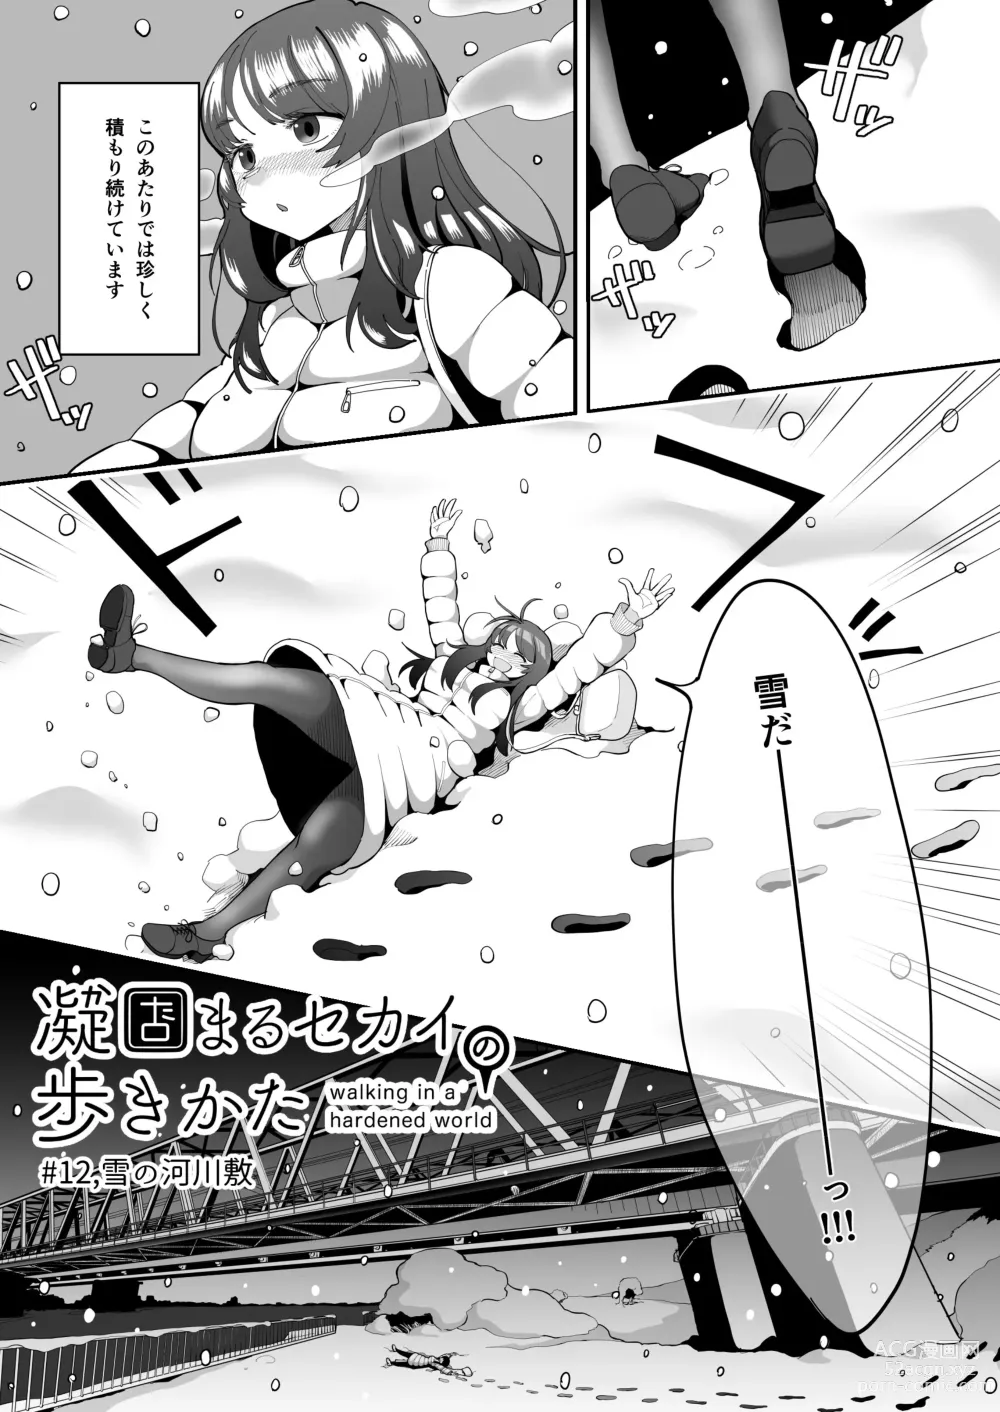 Page 2 of doujinshi Katamaru Sekai no Arukikata - walking in a hardened world #12